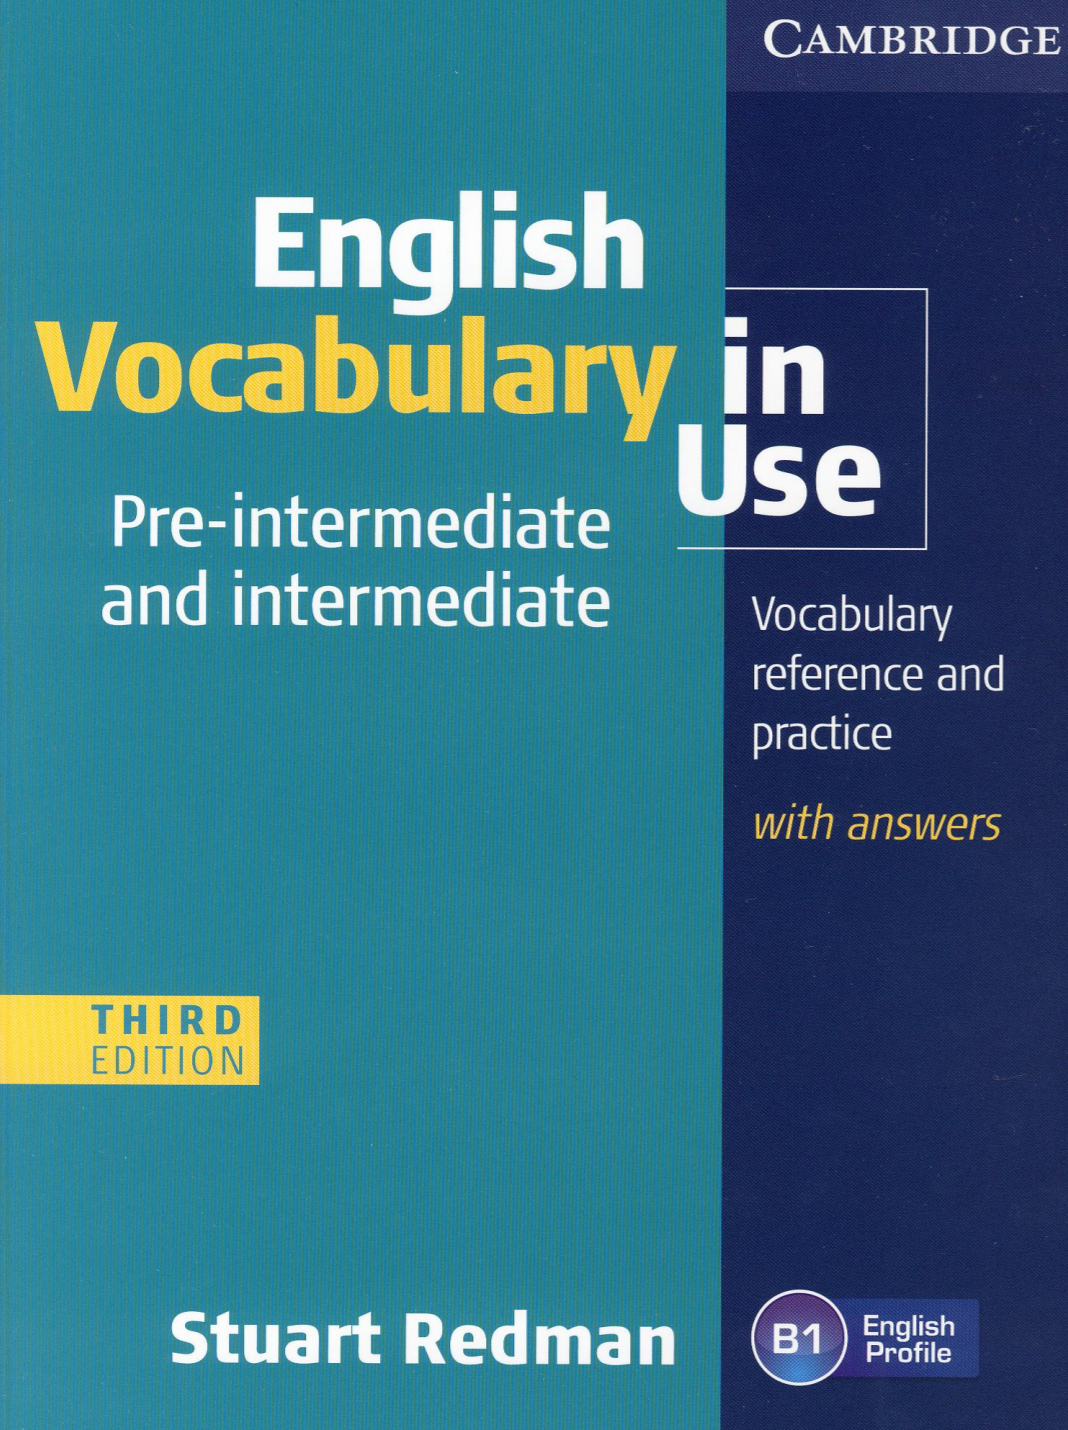 New english vocabulary. Cambridge English Vocabulary in use. Book English Vocabulary in use pre Intermediate. English Vocabulary in use pre-Intermediate. English Vocabulary in use for pre-Intermediate and Intermediate..